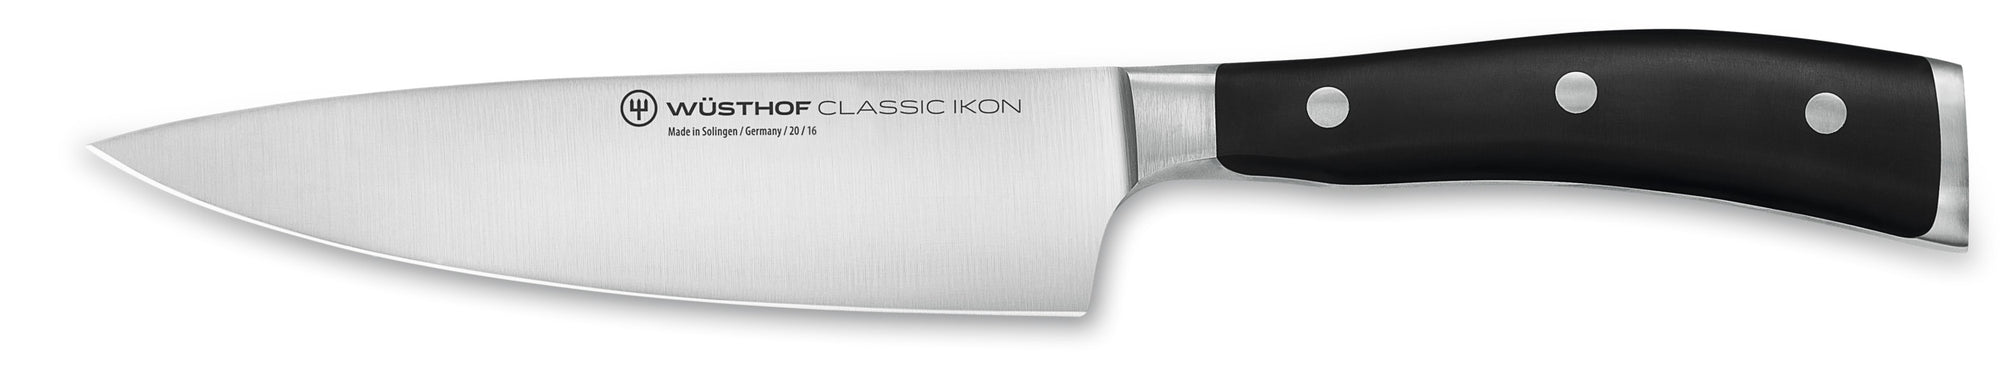 Wusthof Classic IKON Chef's Knife, 6-inch (16cm) - 4596-16 Canada